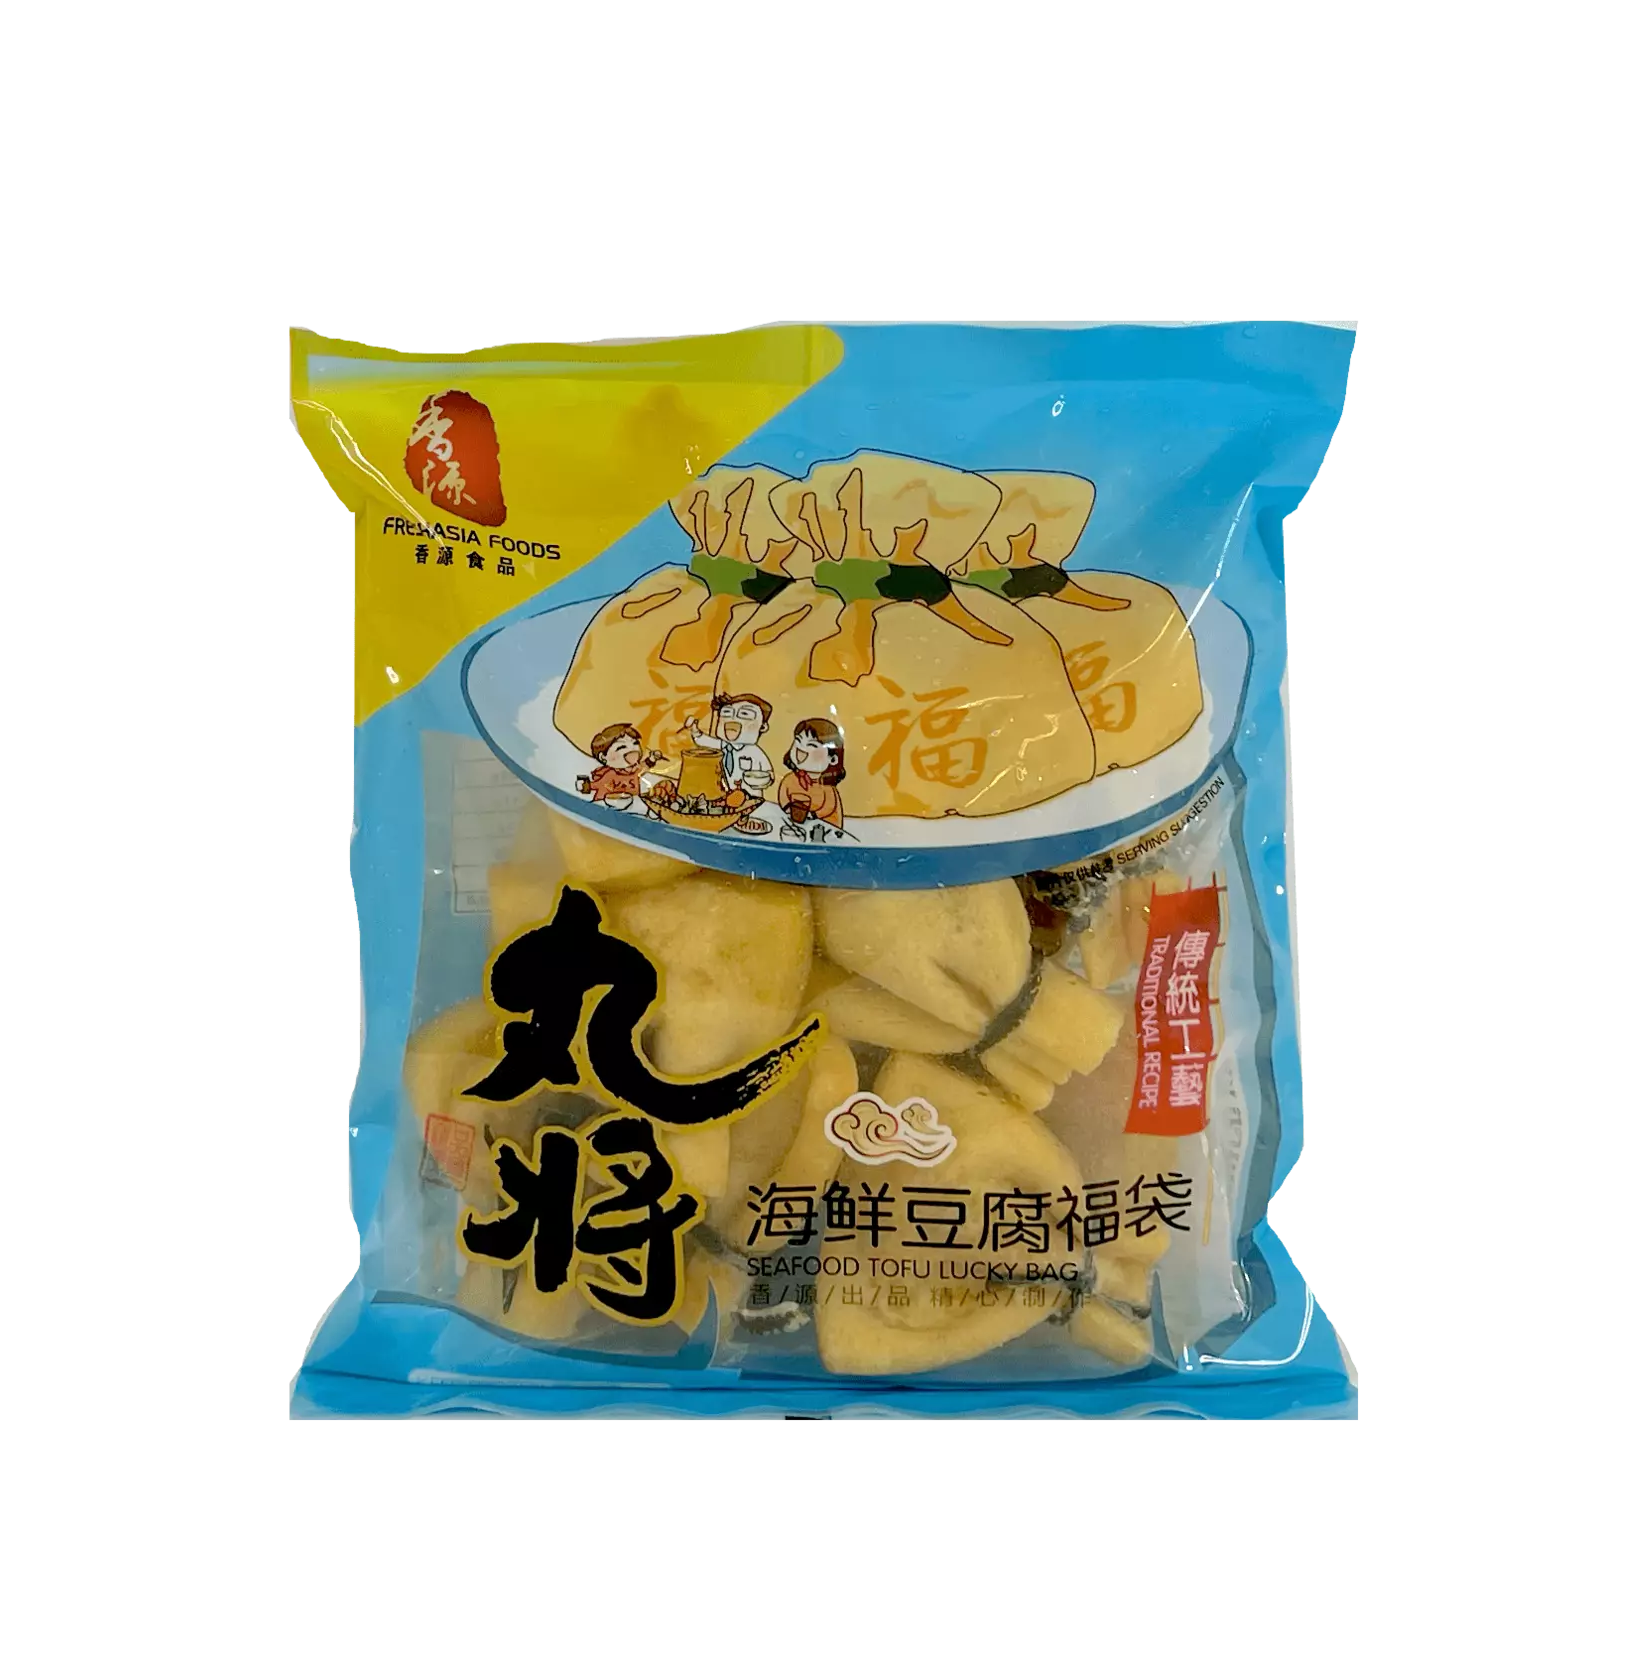 Seafood Tofu Lucky Bag  Frozen 200g WJ Freshasia China